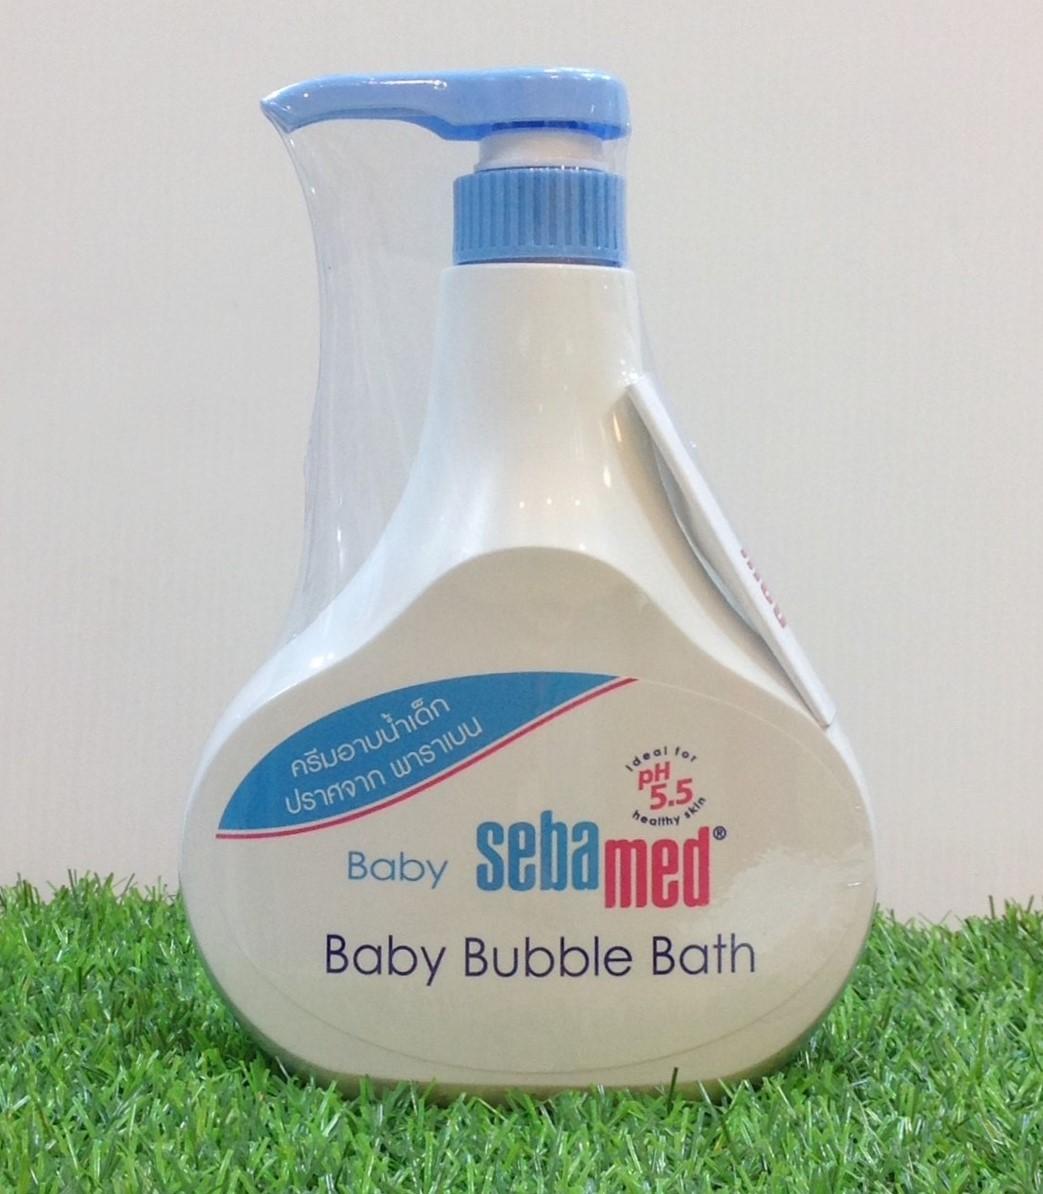 Sebamed Baby Bubble Bath ซีบาเมด เบบี้ บับเบิ้ล บาธ 500 ml. มี pH 5.5 x 1 ขวด / อาบน้ำสำหรับเด็ก ทารก และ ทุกคนในครอบครัว